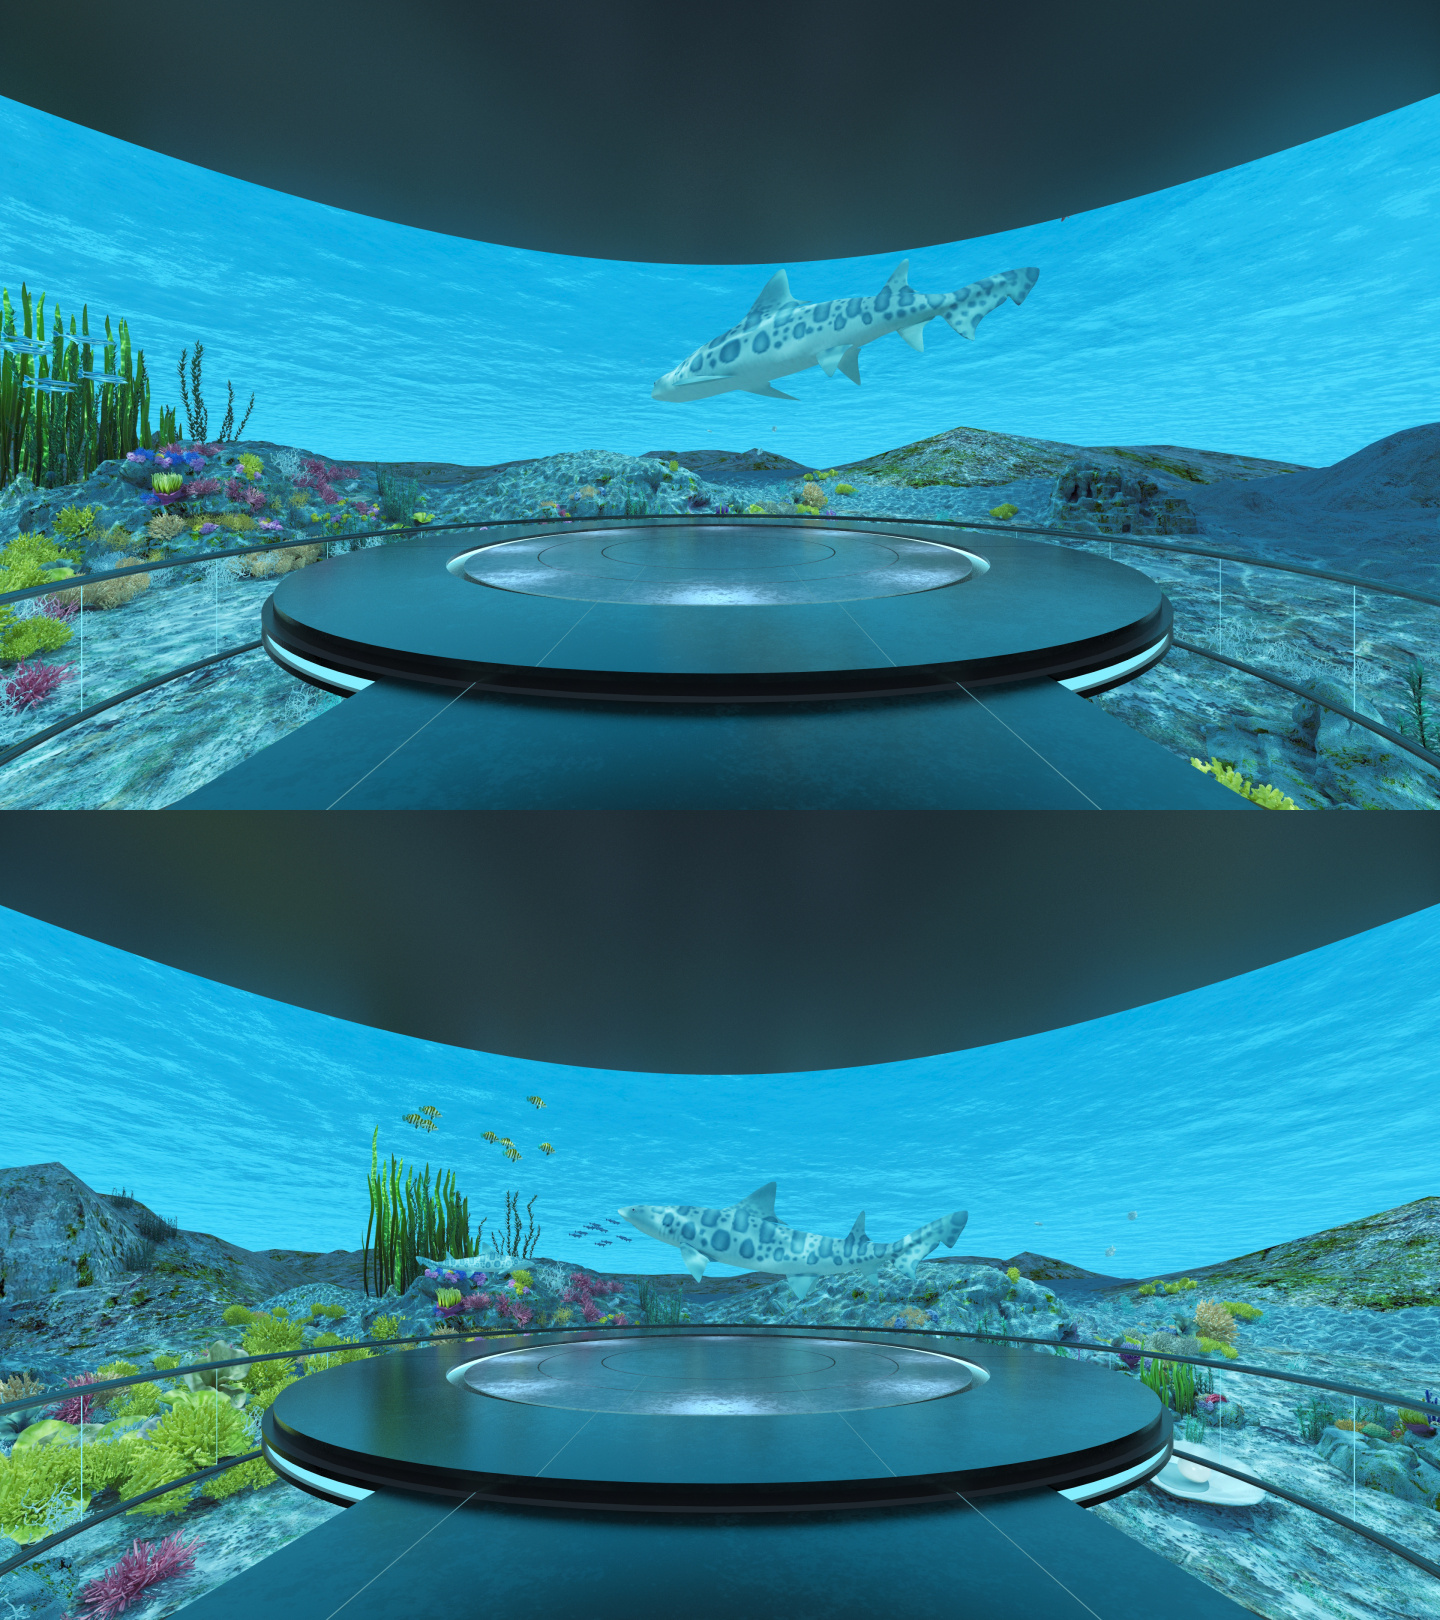 4K_深海海底180度超宽弧形屏裸眼3D